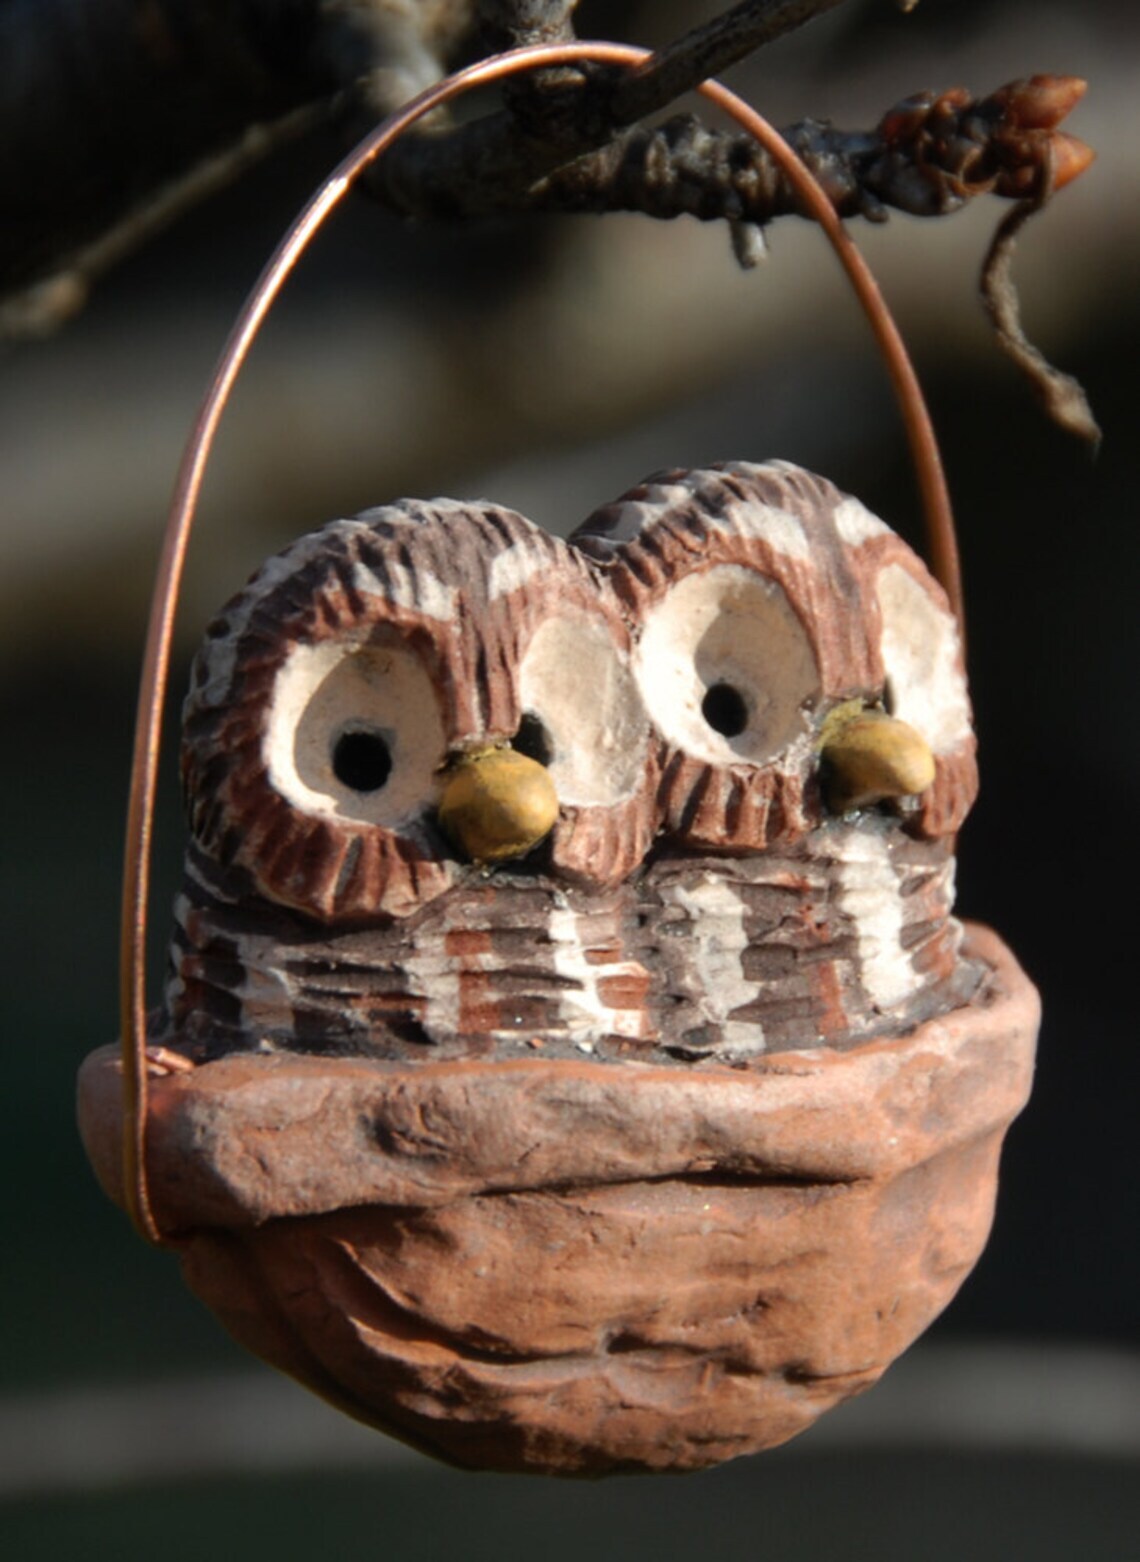 Sleeping baby barred owls ornament